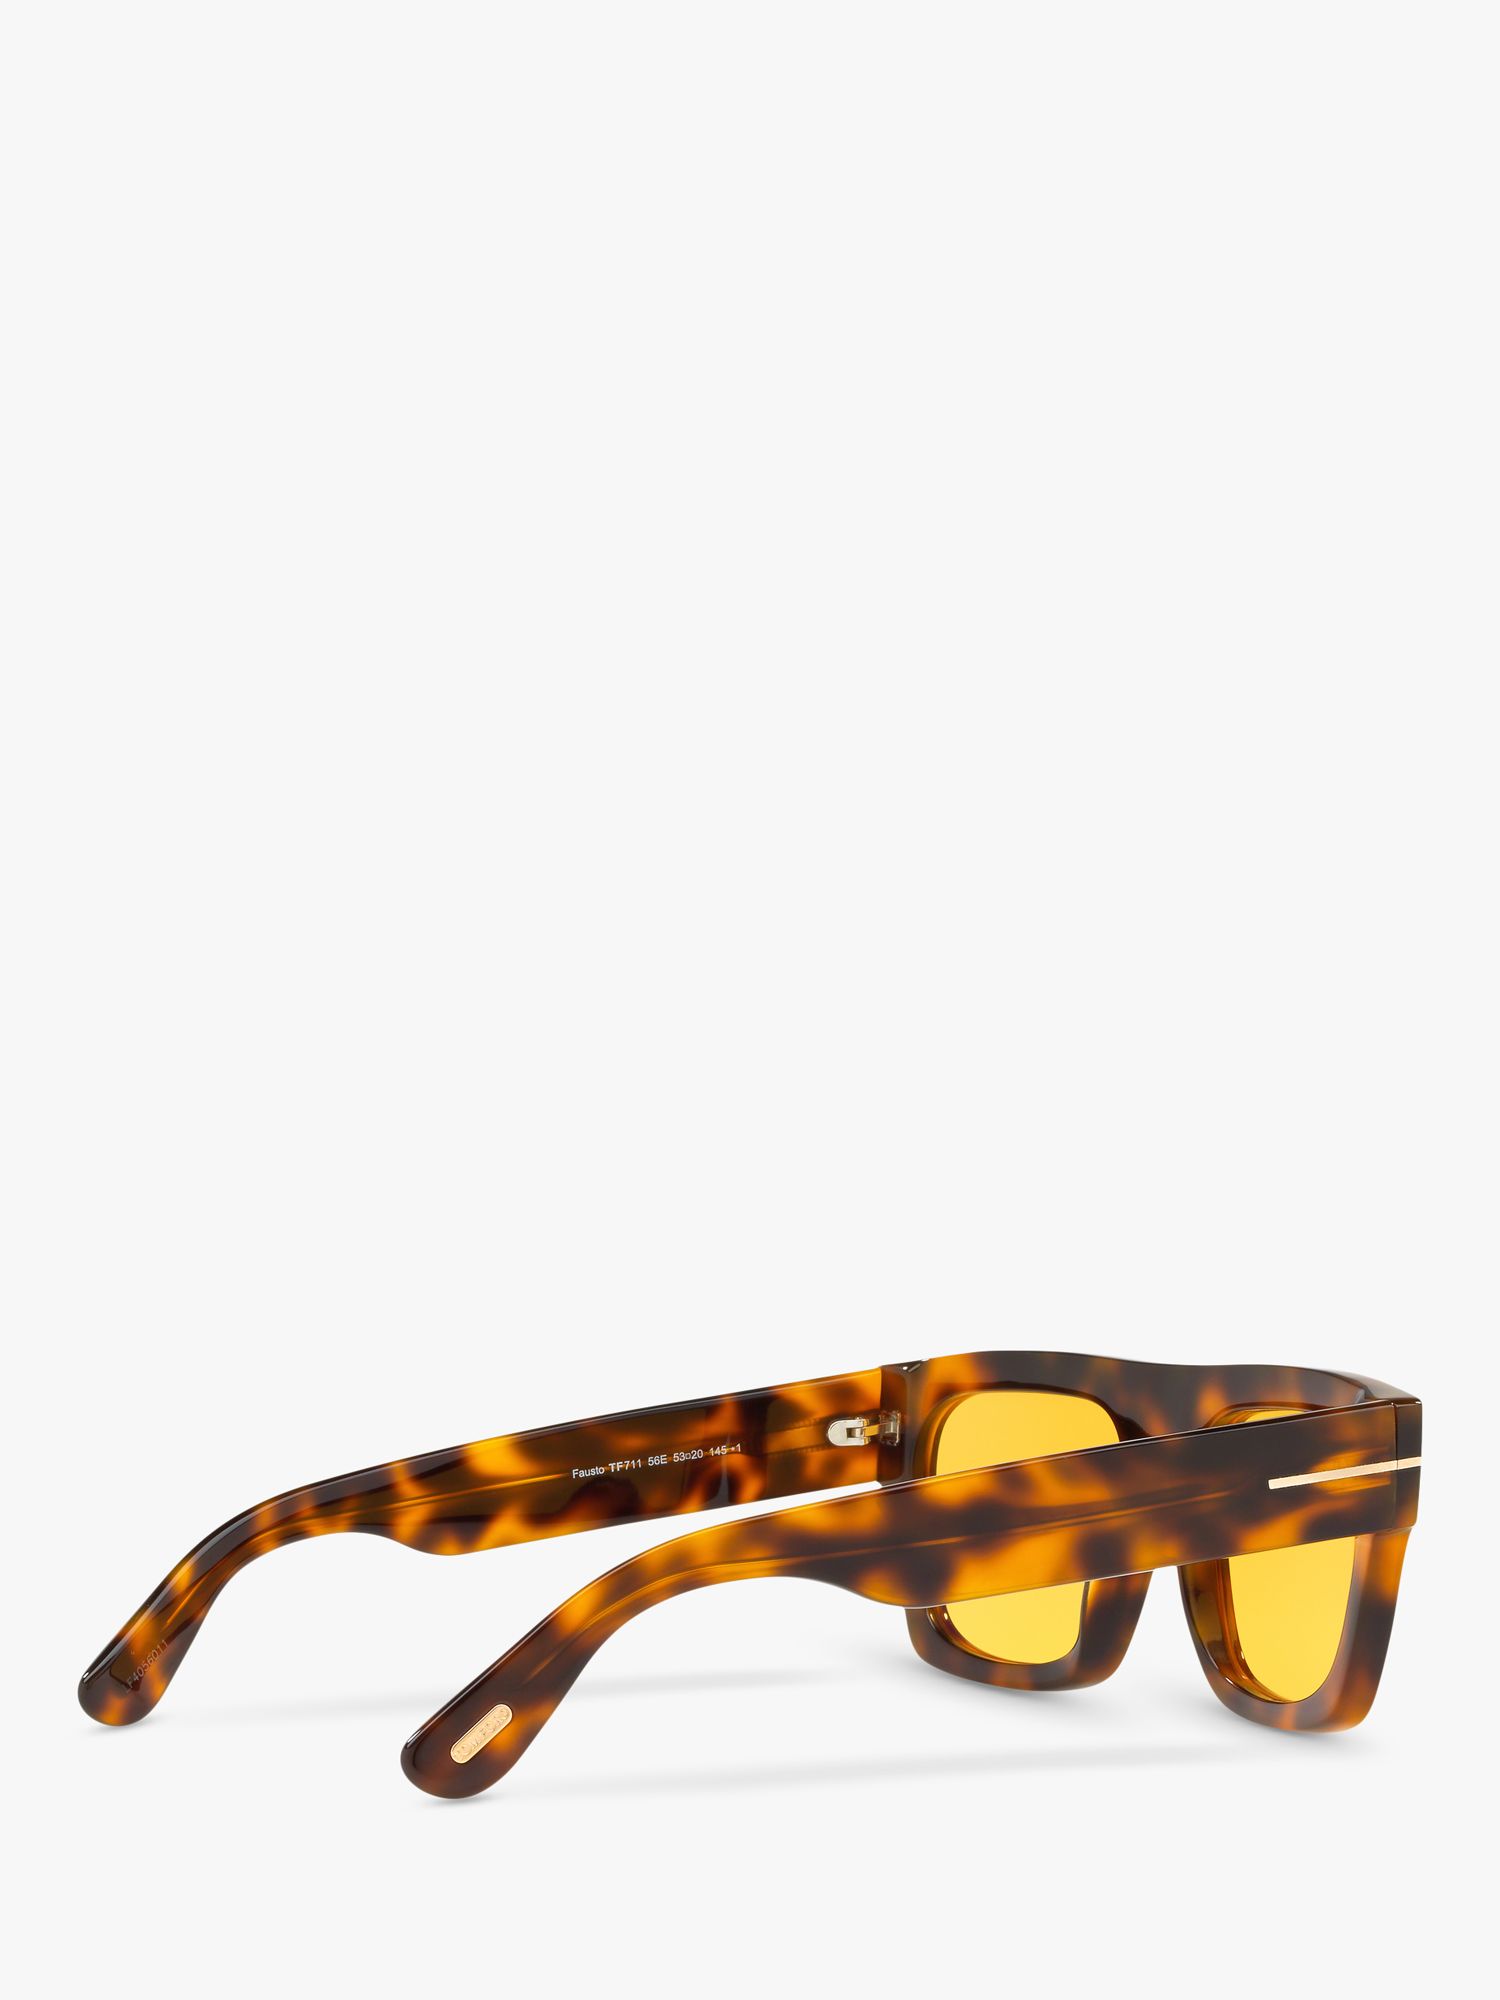 TOM FORD FT0711 Men's Fausto Square Sunglasses, Tortoise/Yellow at John  Lewis & Partners